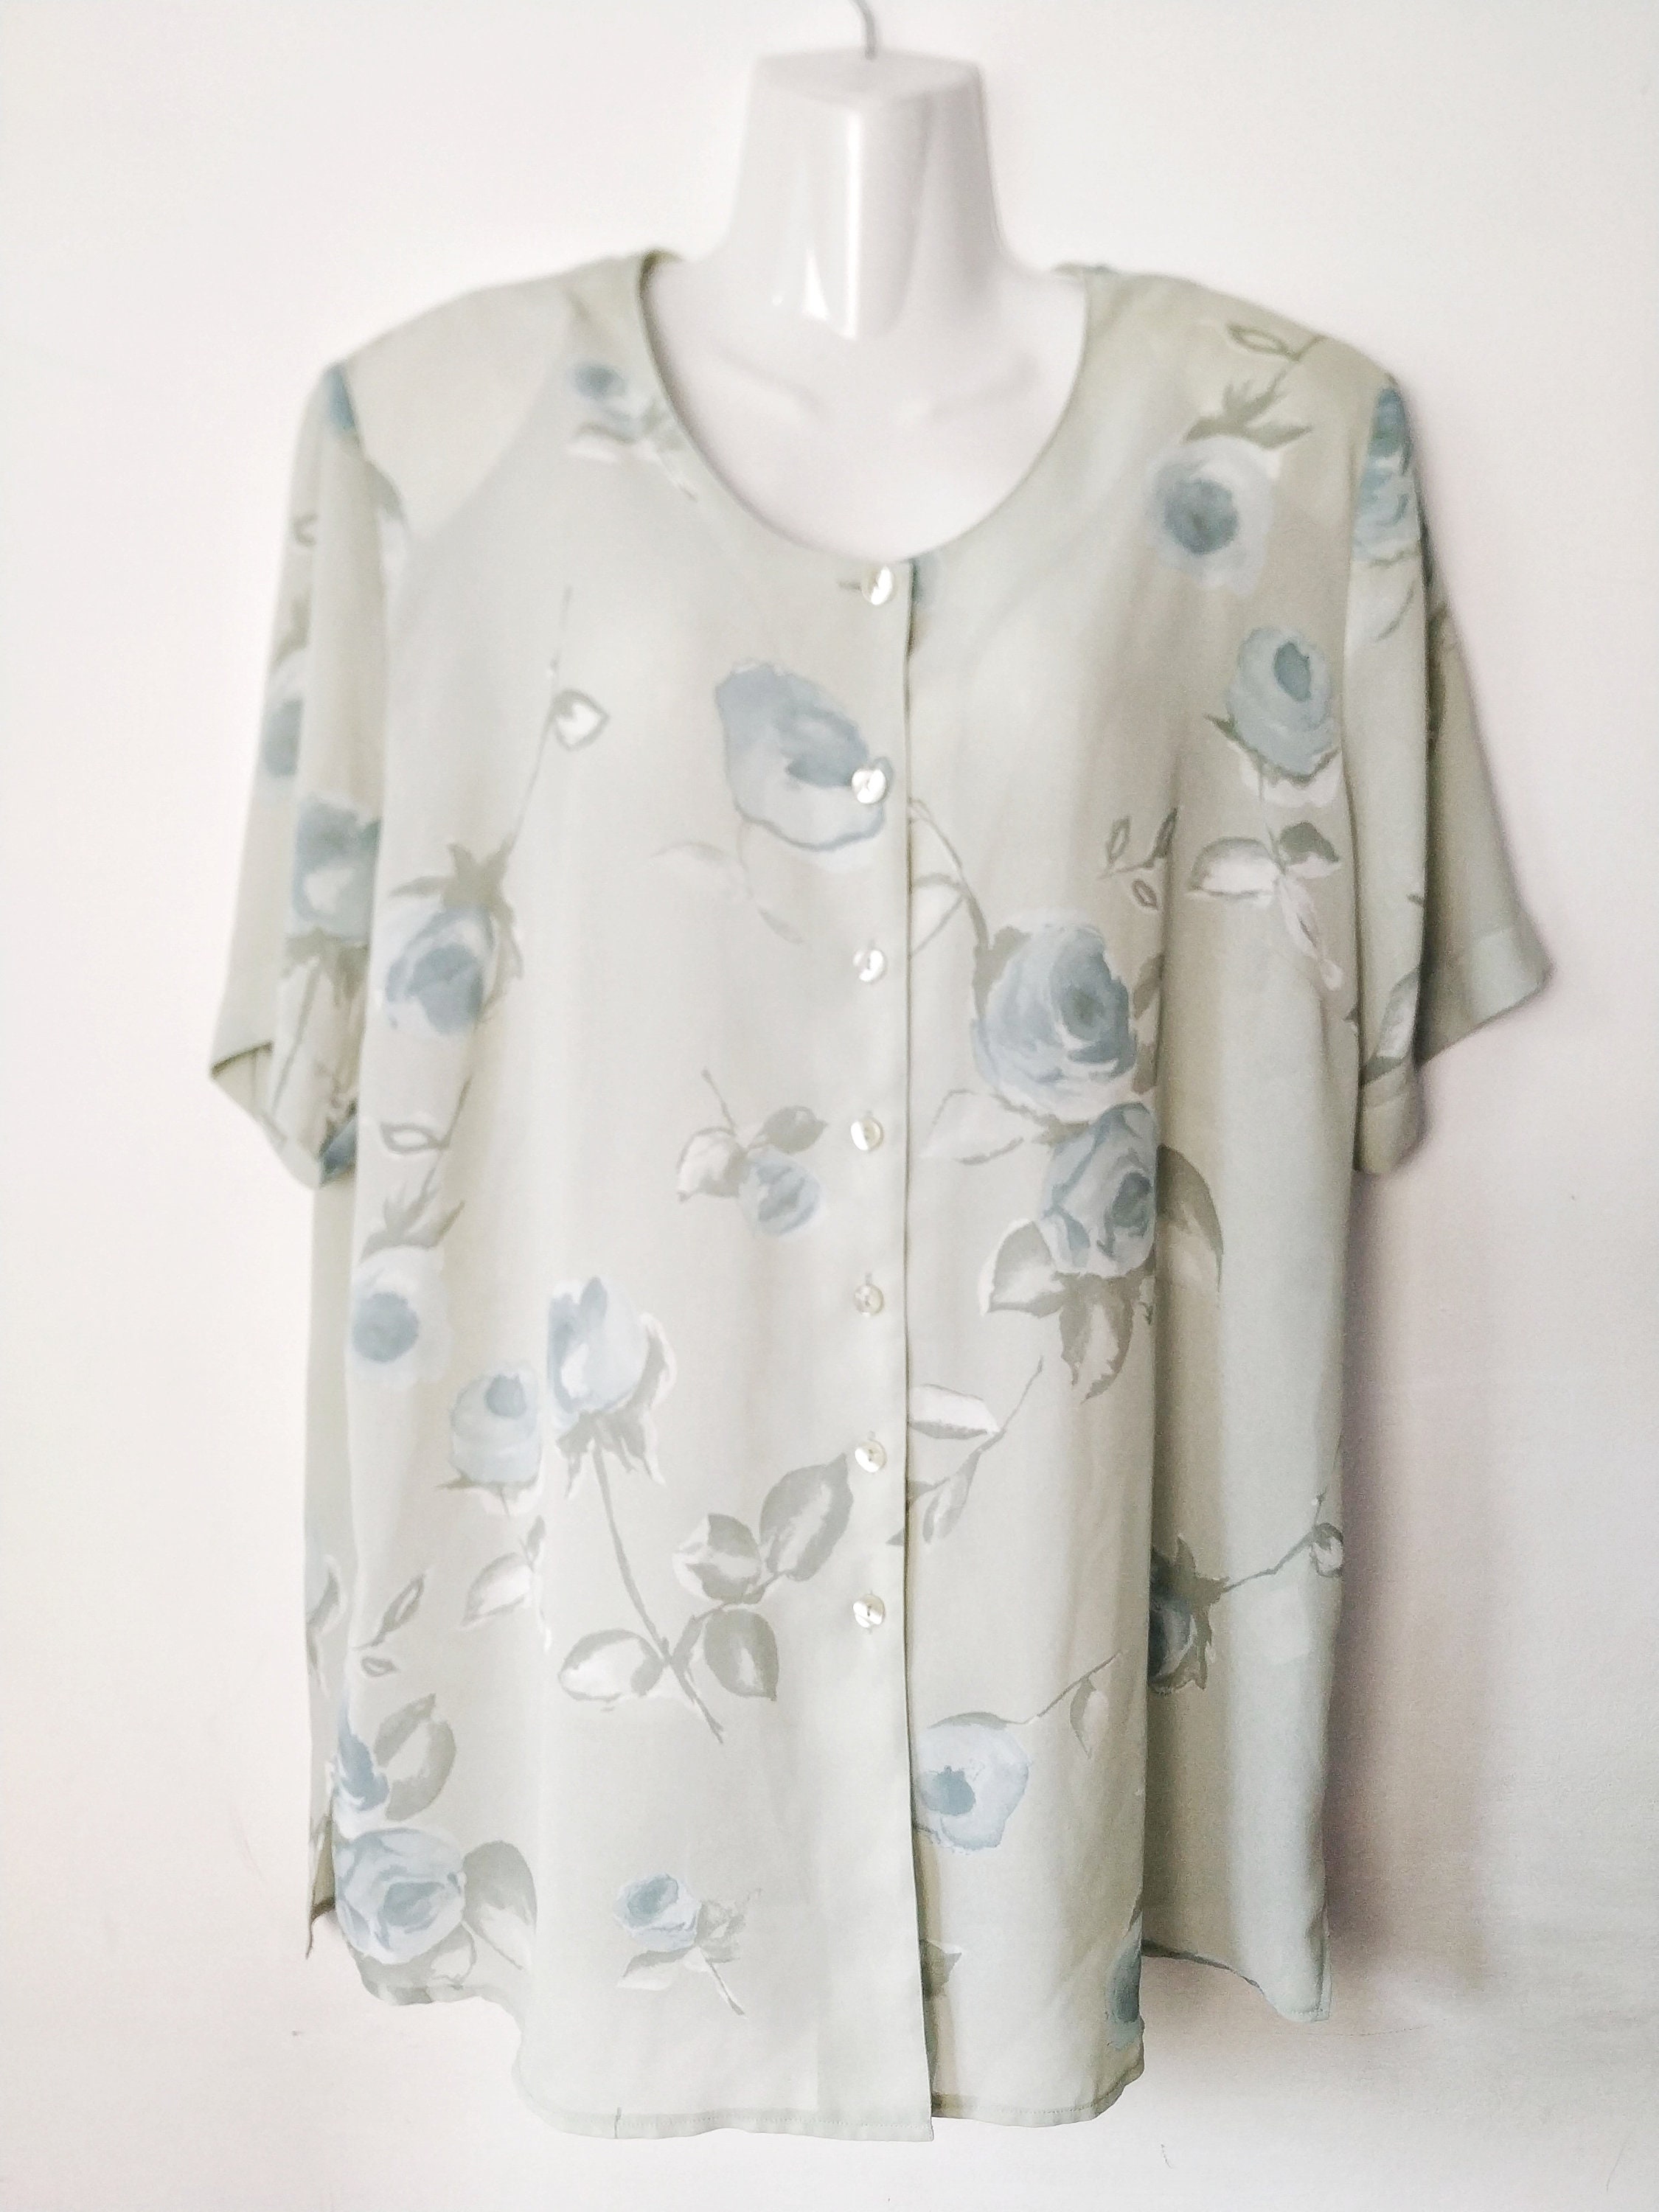 Vintage pastel summer blouse Pale green and blue floral | Etsy